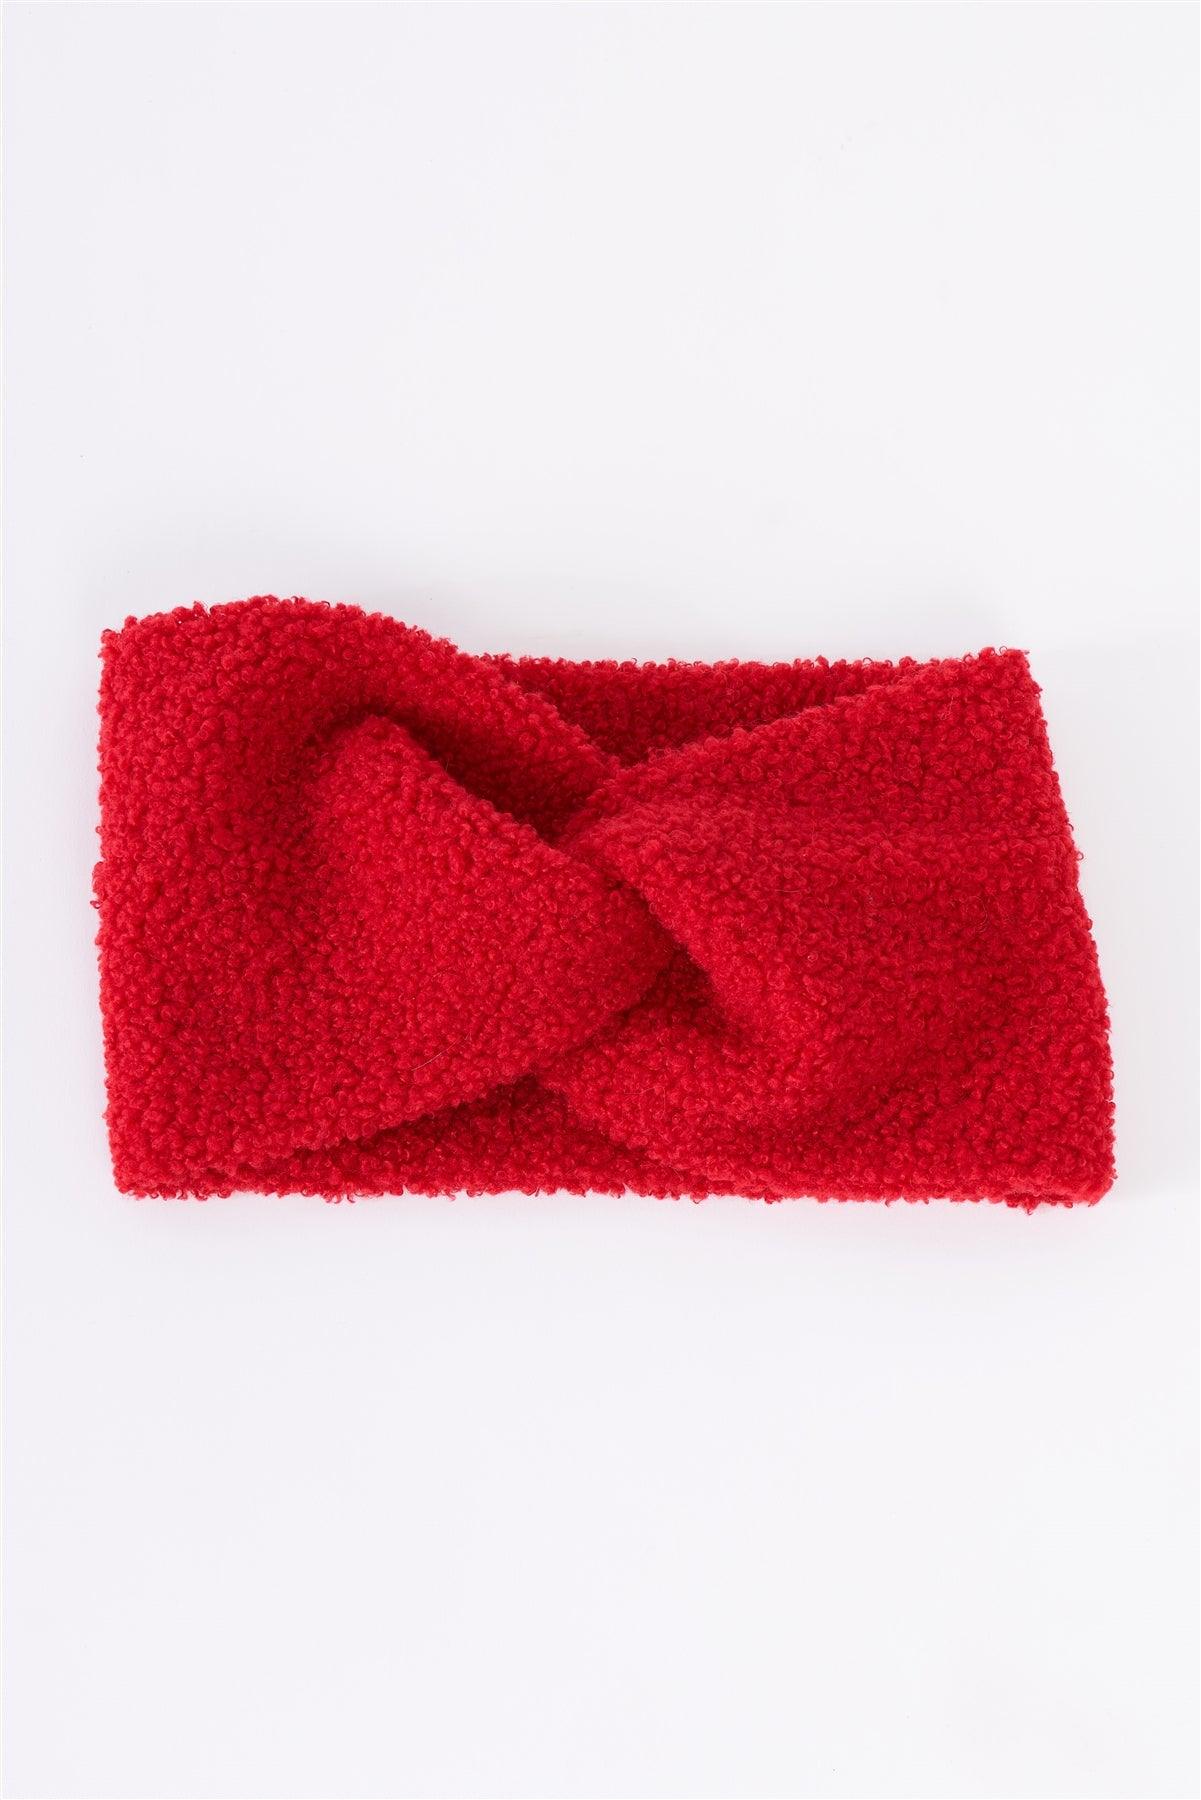 Cranberry Red Faux Shearling Fur Turban Twist Winter Headband /3 Pieces